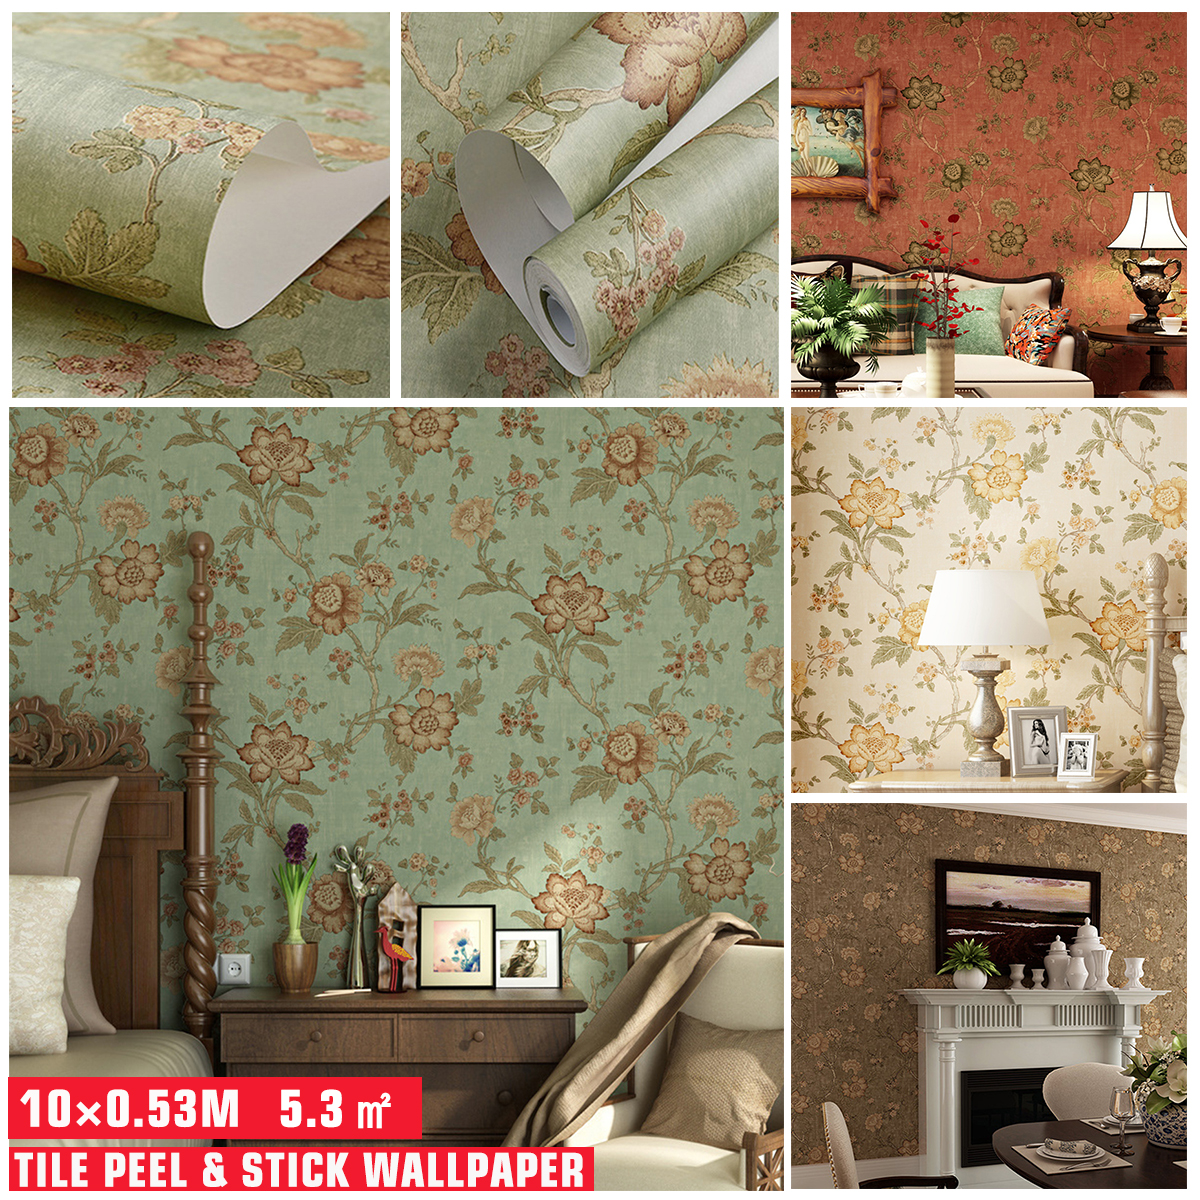 10m53cm-Self-Adhesive-Wall-Tile-Sticker-Living-Room-Home-Decor-2-Type-Art-Decoration-1814021-1